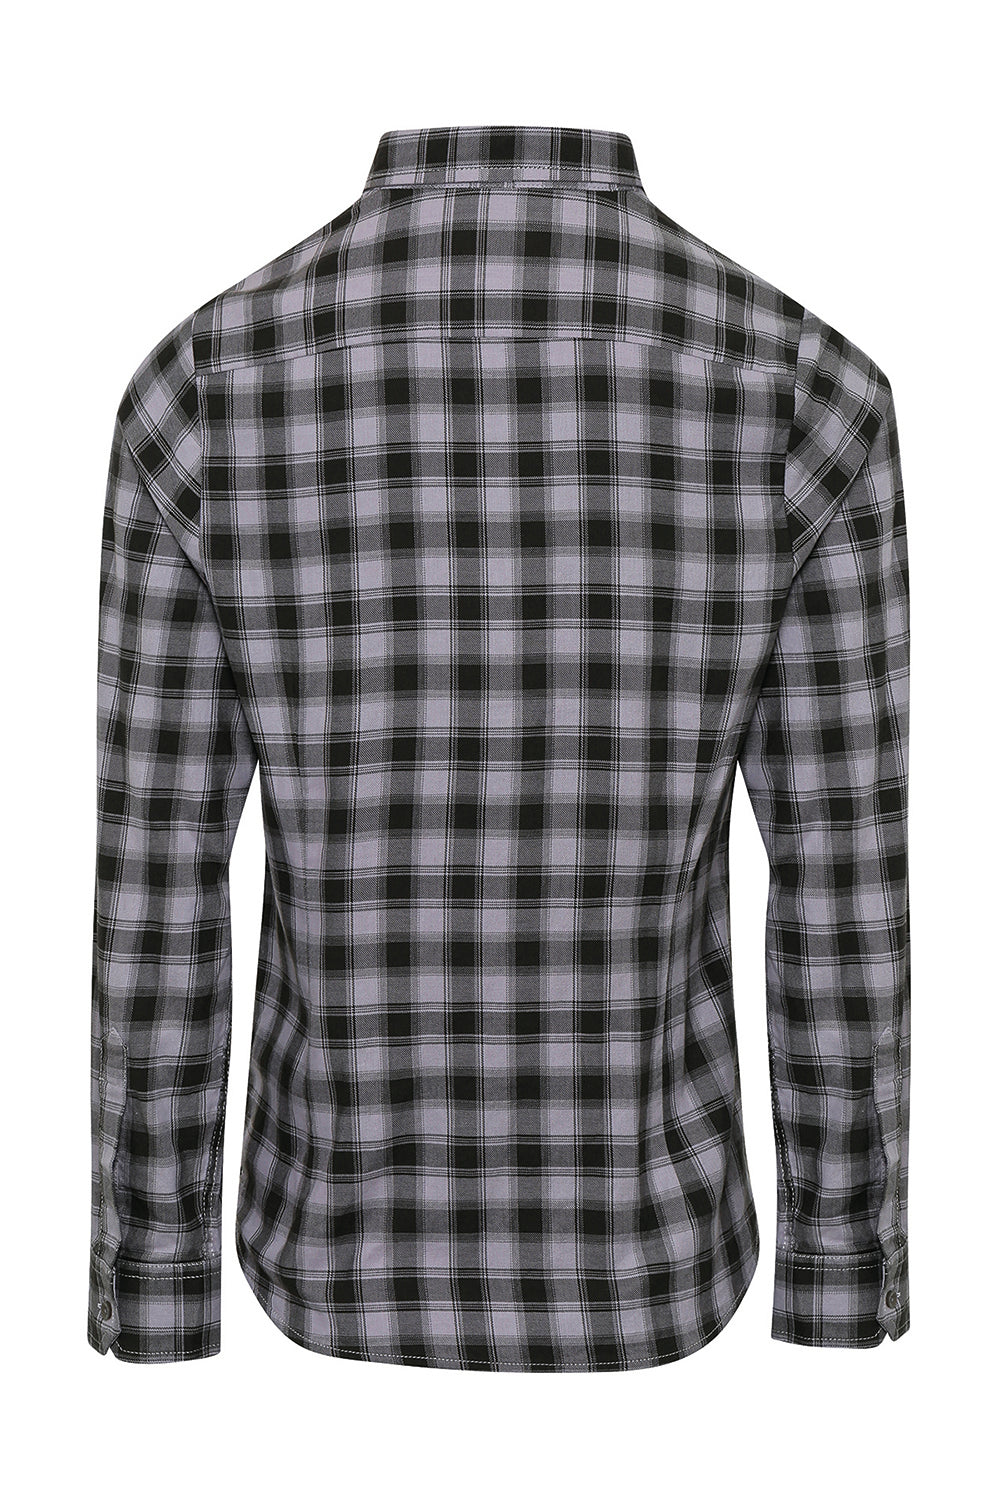 Artisan Collection RP350 Womens Mulligan Check Long Sleeve Button Down Shirt Steel Grey/Black Model Flat Back